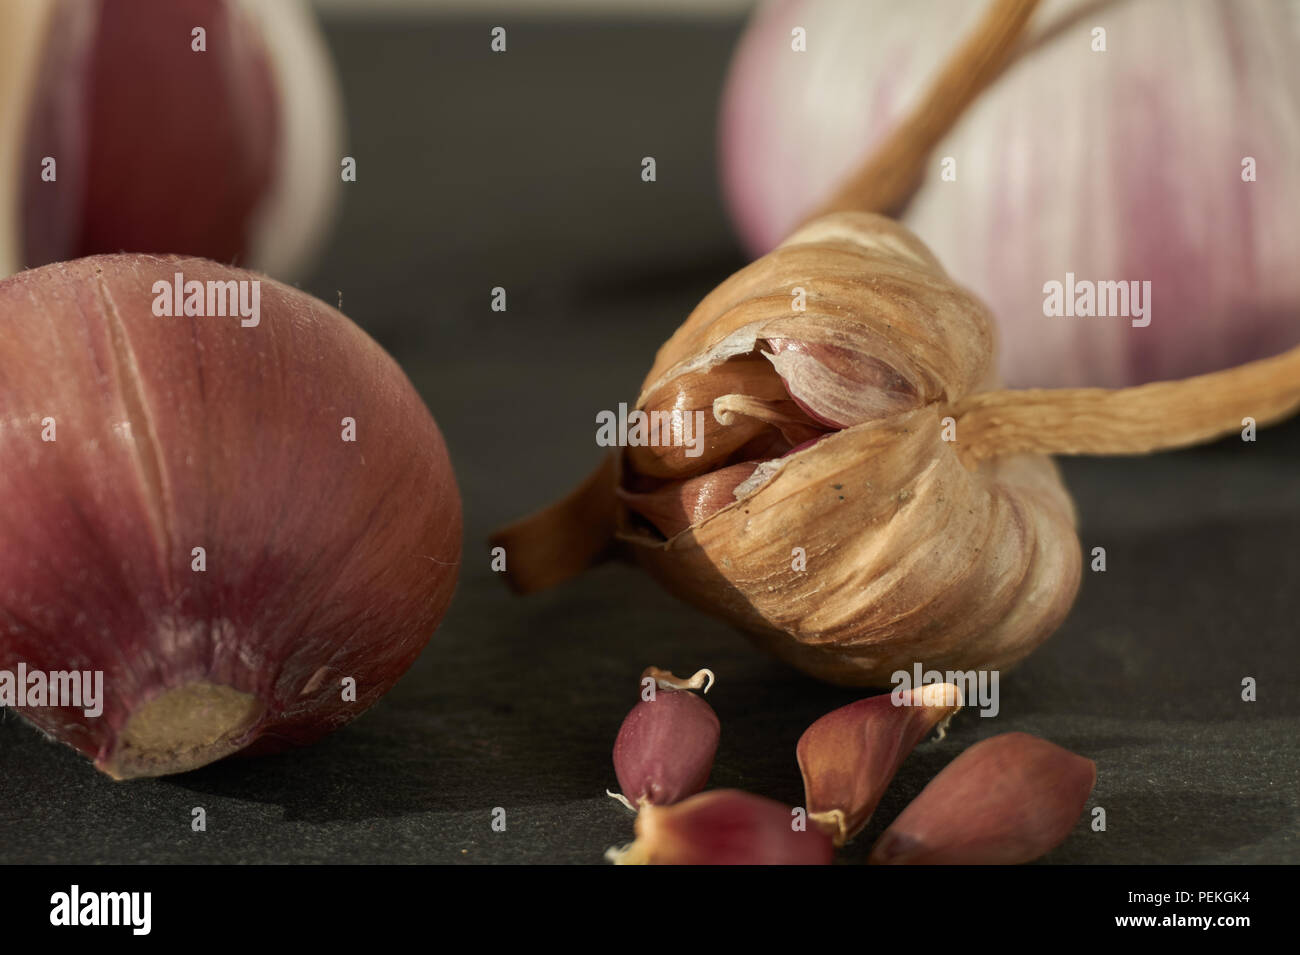 Garlic bulbs cloves and bulbil on dark stone background, growing garlic from cloves or bulbils concept Stock Photo